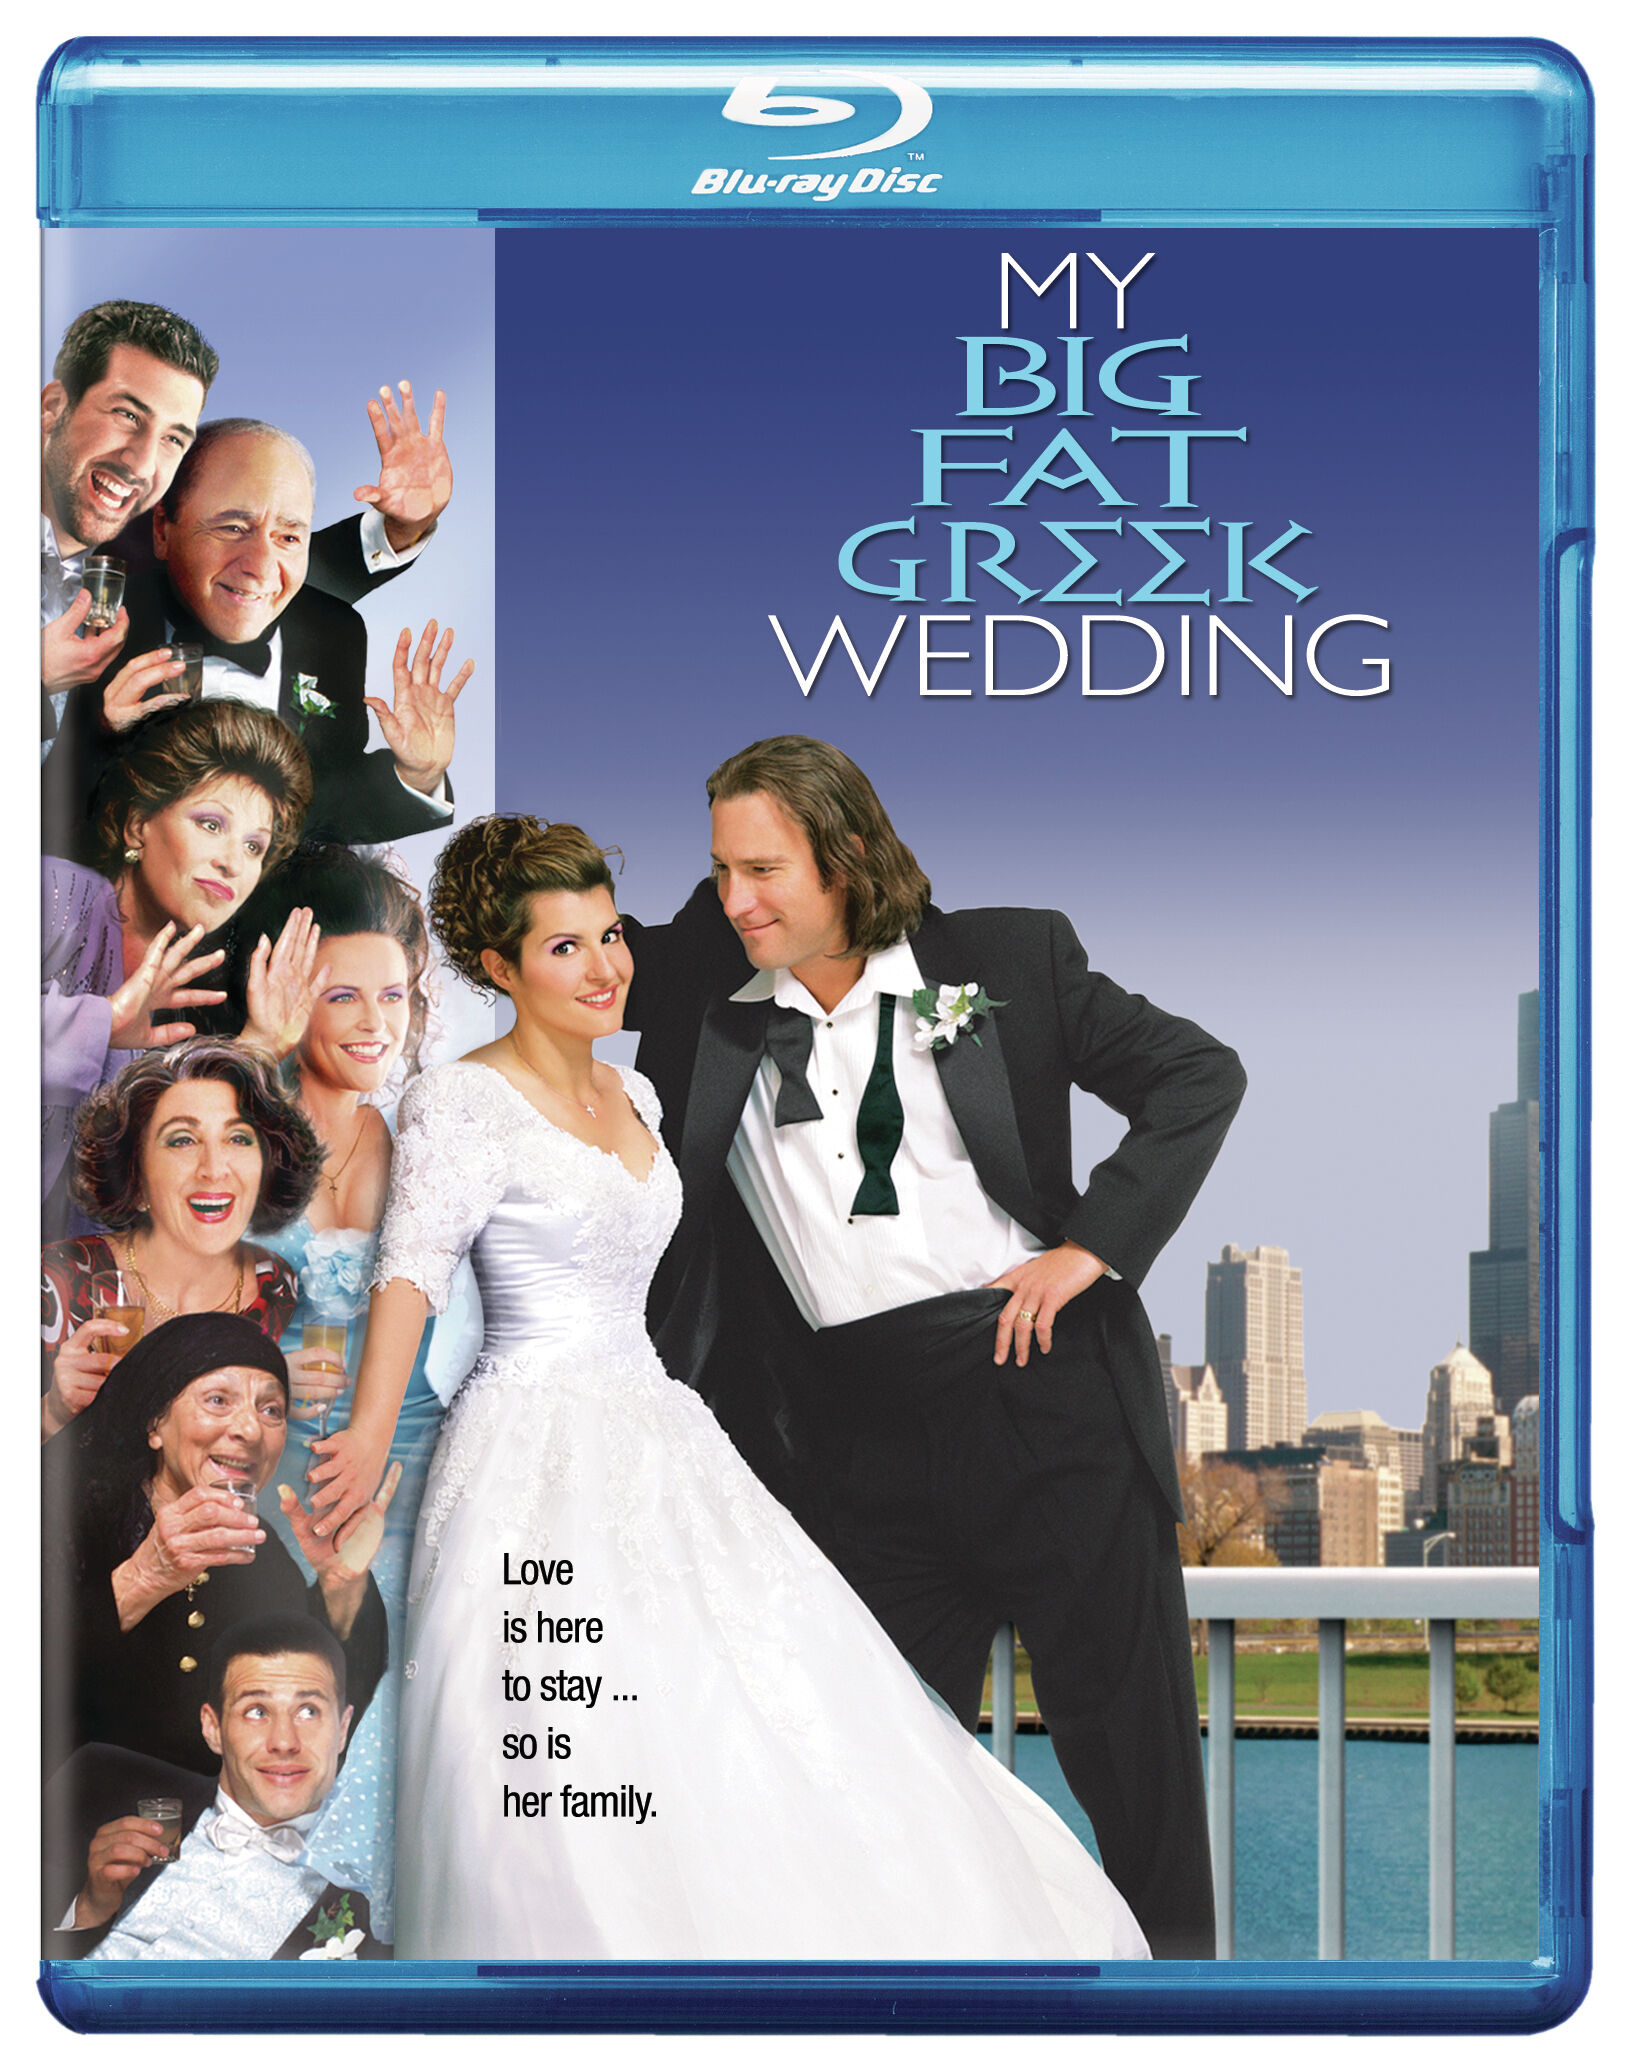 My Big Fat Greek Wedding - Blu-ray [ 2002 ]  - Comedy Movies On Blu-ray - Movies On GRUV